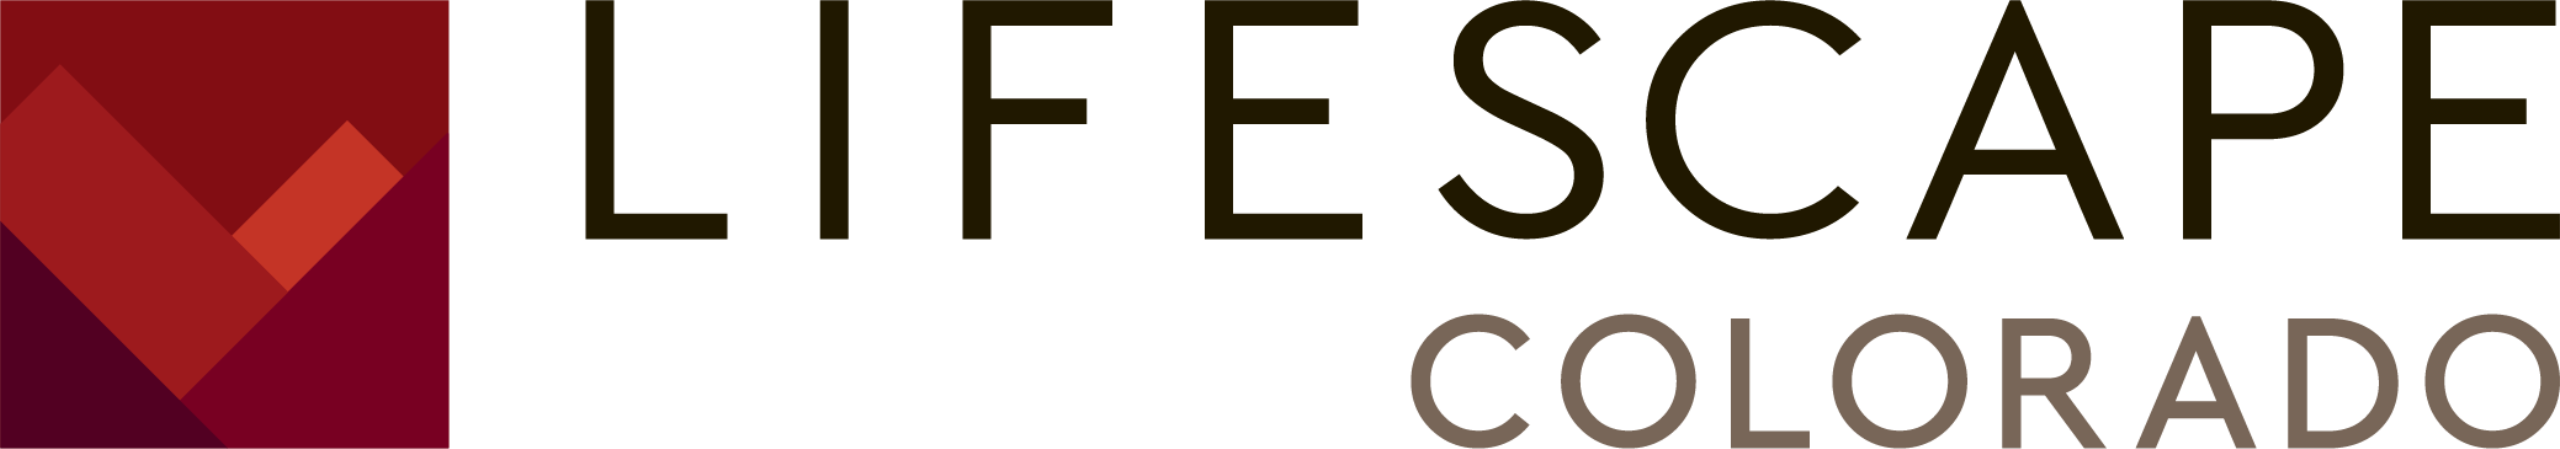 Lifescape Colorado Logo